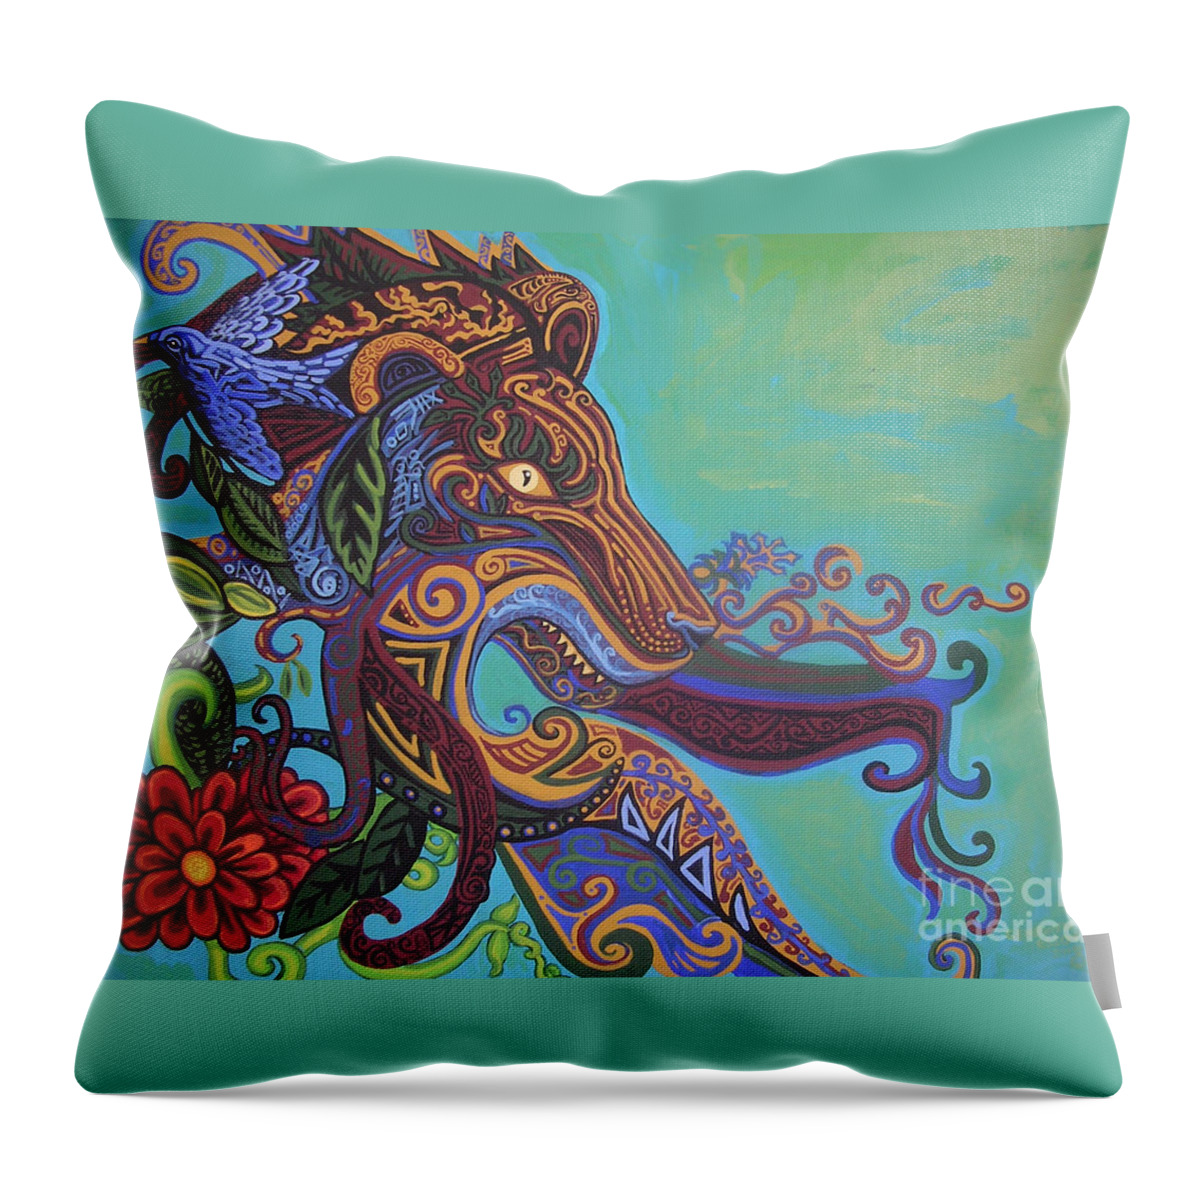 Gargoyle Lion Throw Pillow featuring the painting Gargoyle Lion by Genevieve Esson